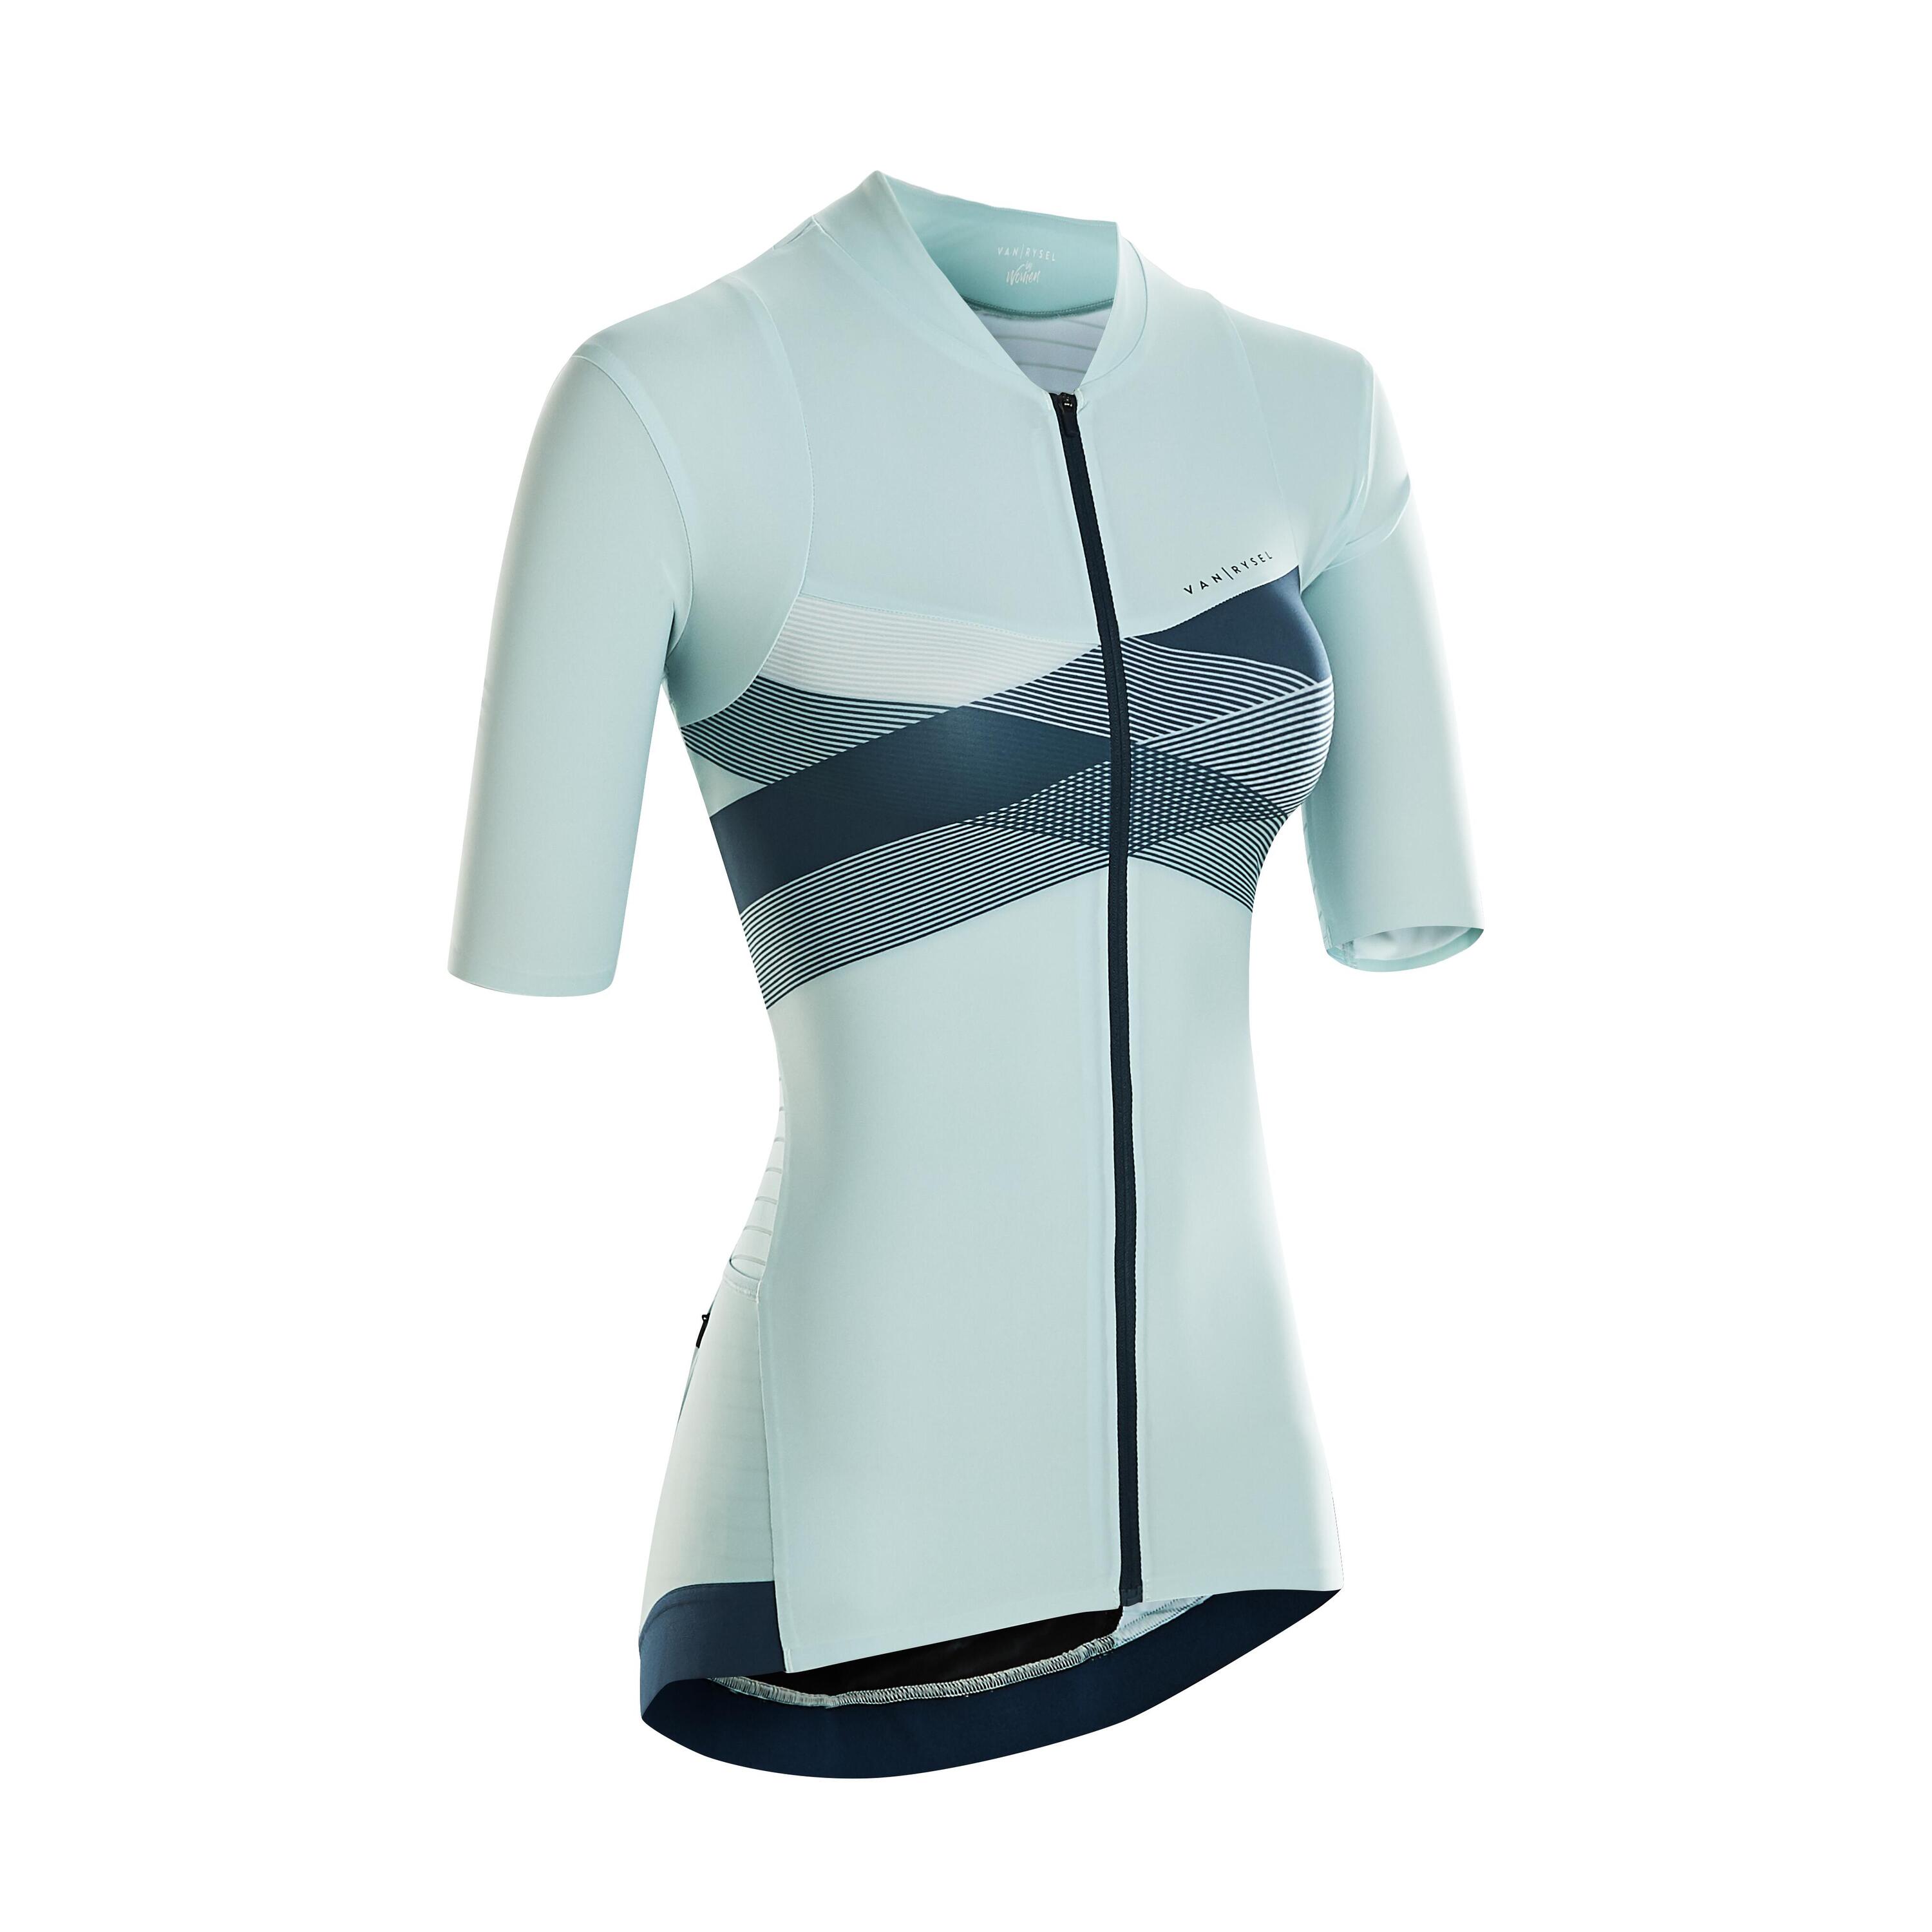 VAN RYSEL Women's Cycling Short-Sleeved Jersey RCR - Mint/Cross